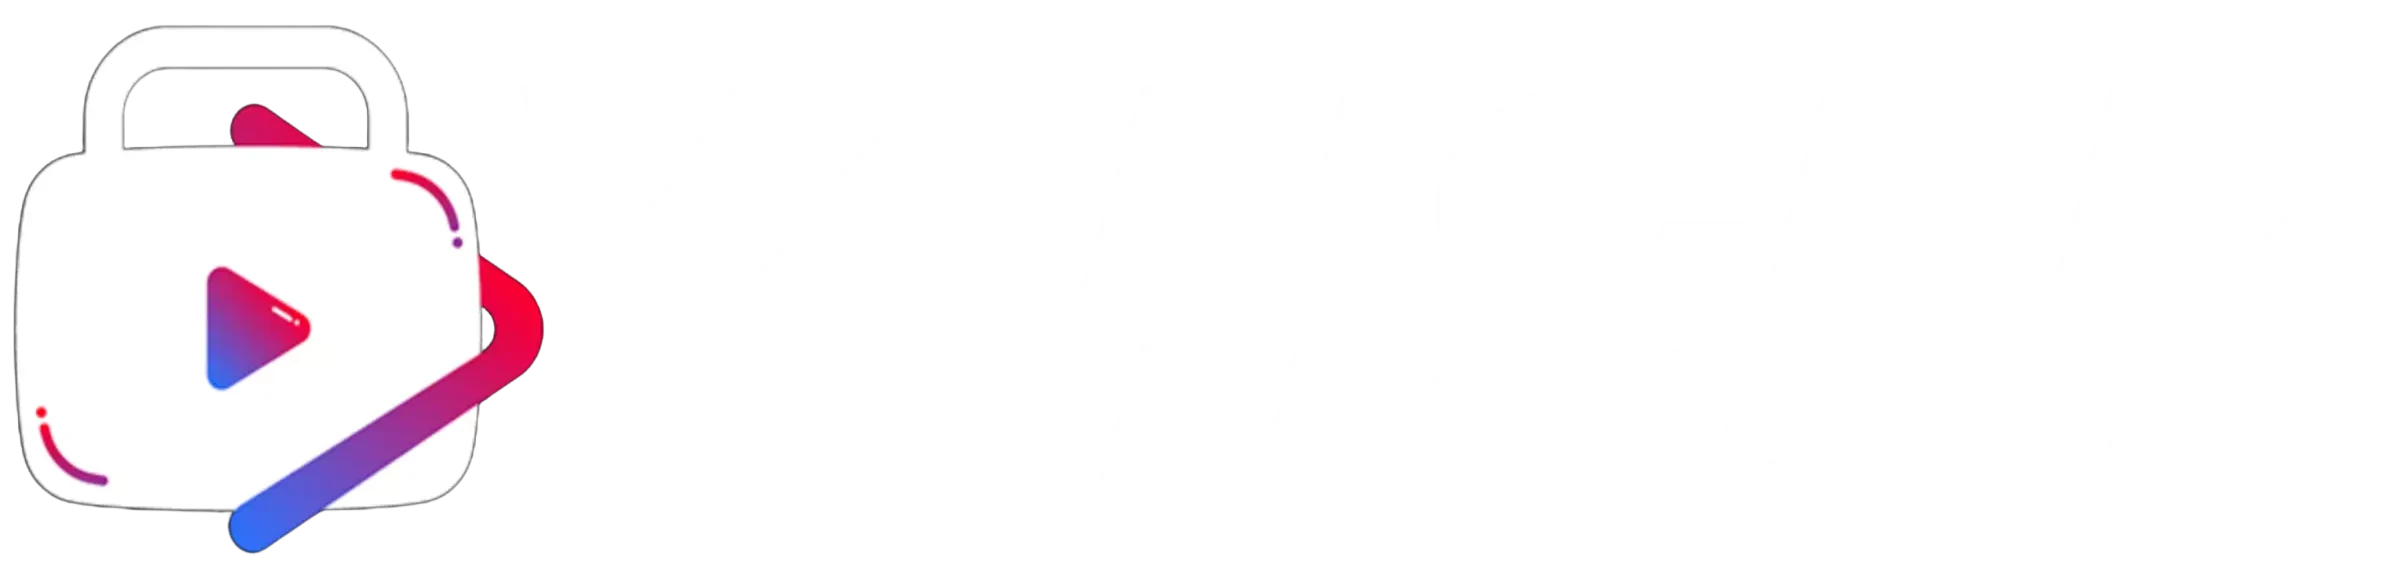 VancedManager.org